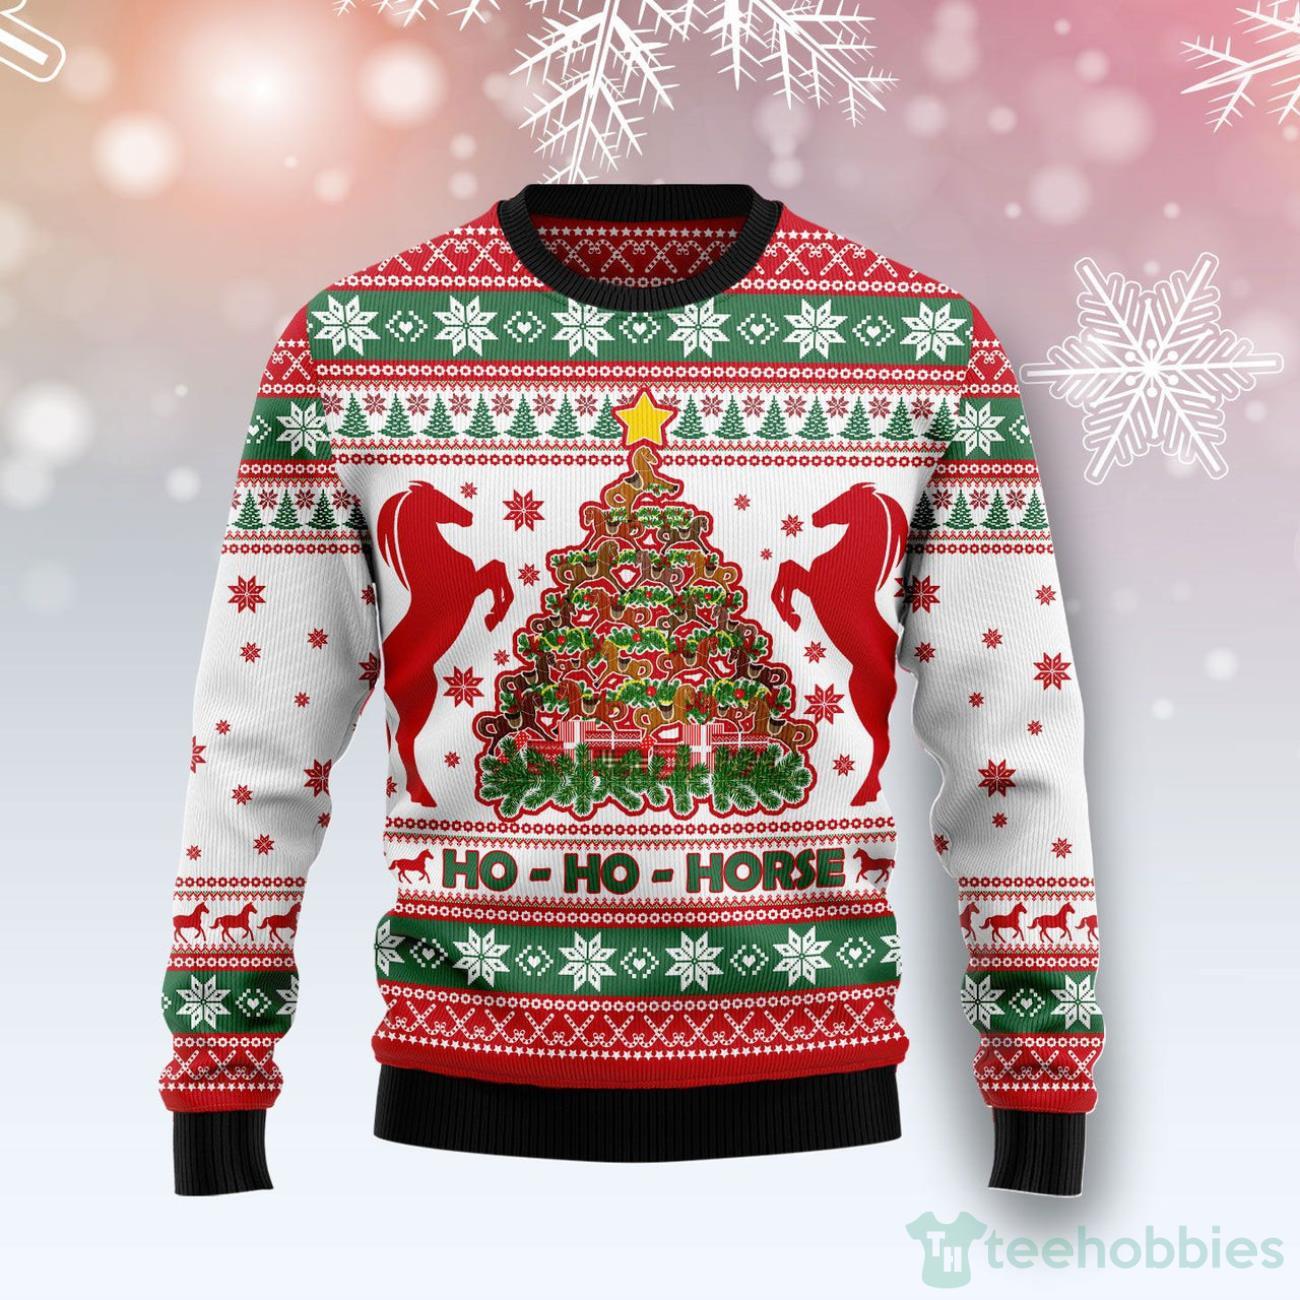 Ho Ho Horses Christmas Tree Ugly Christmas Sweater Product Photo 1